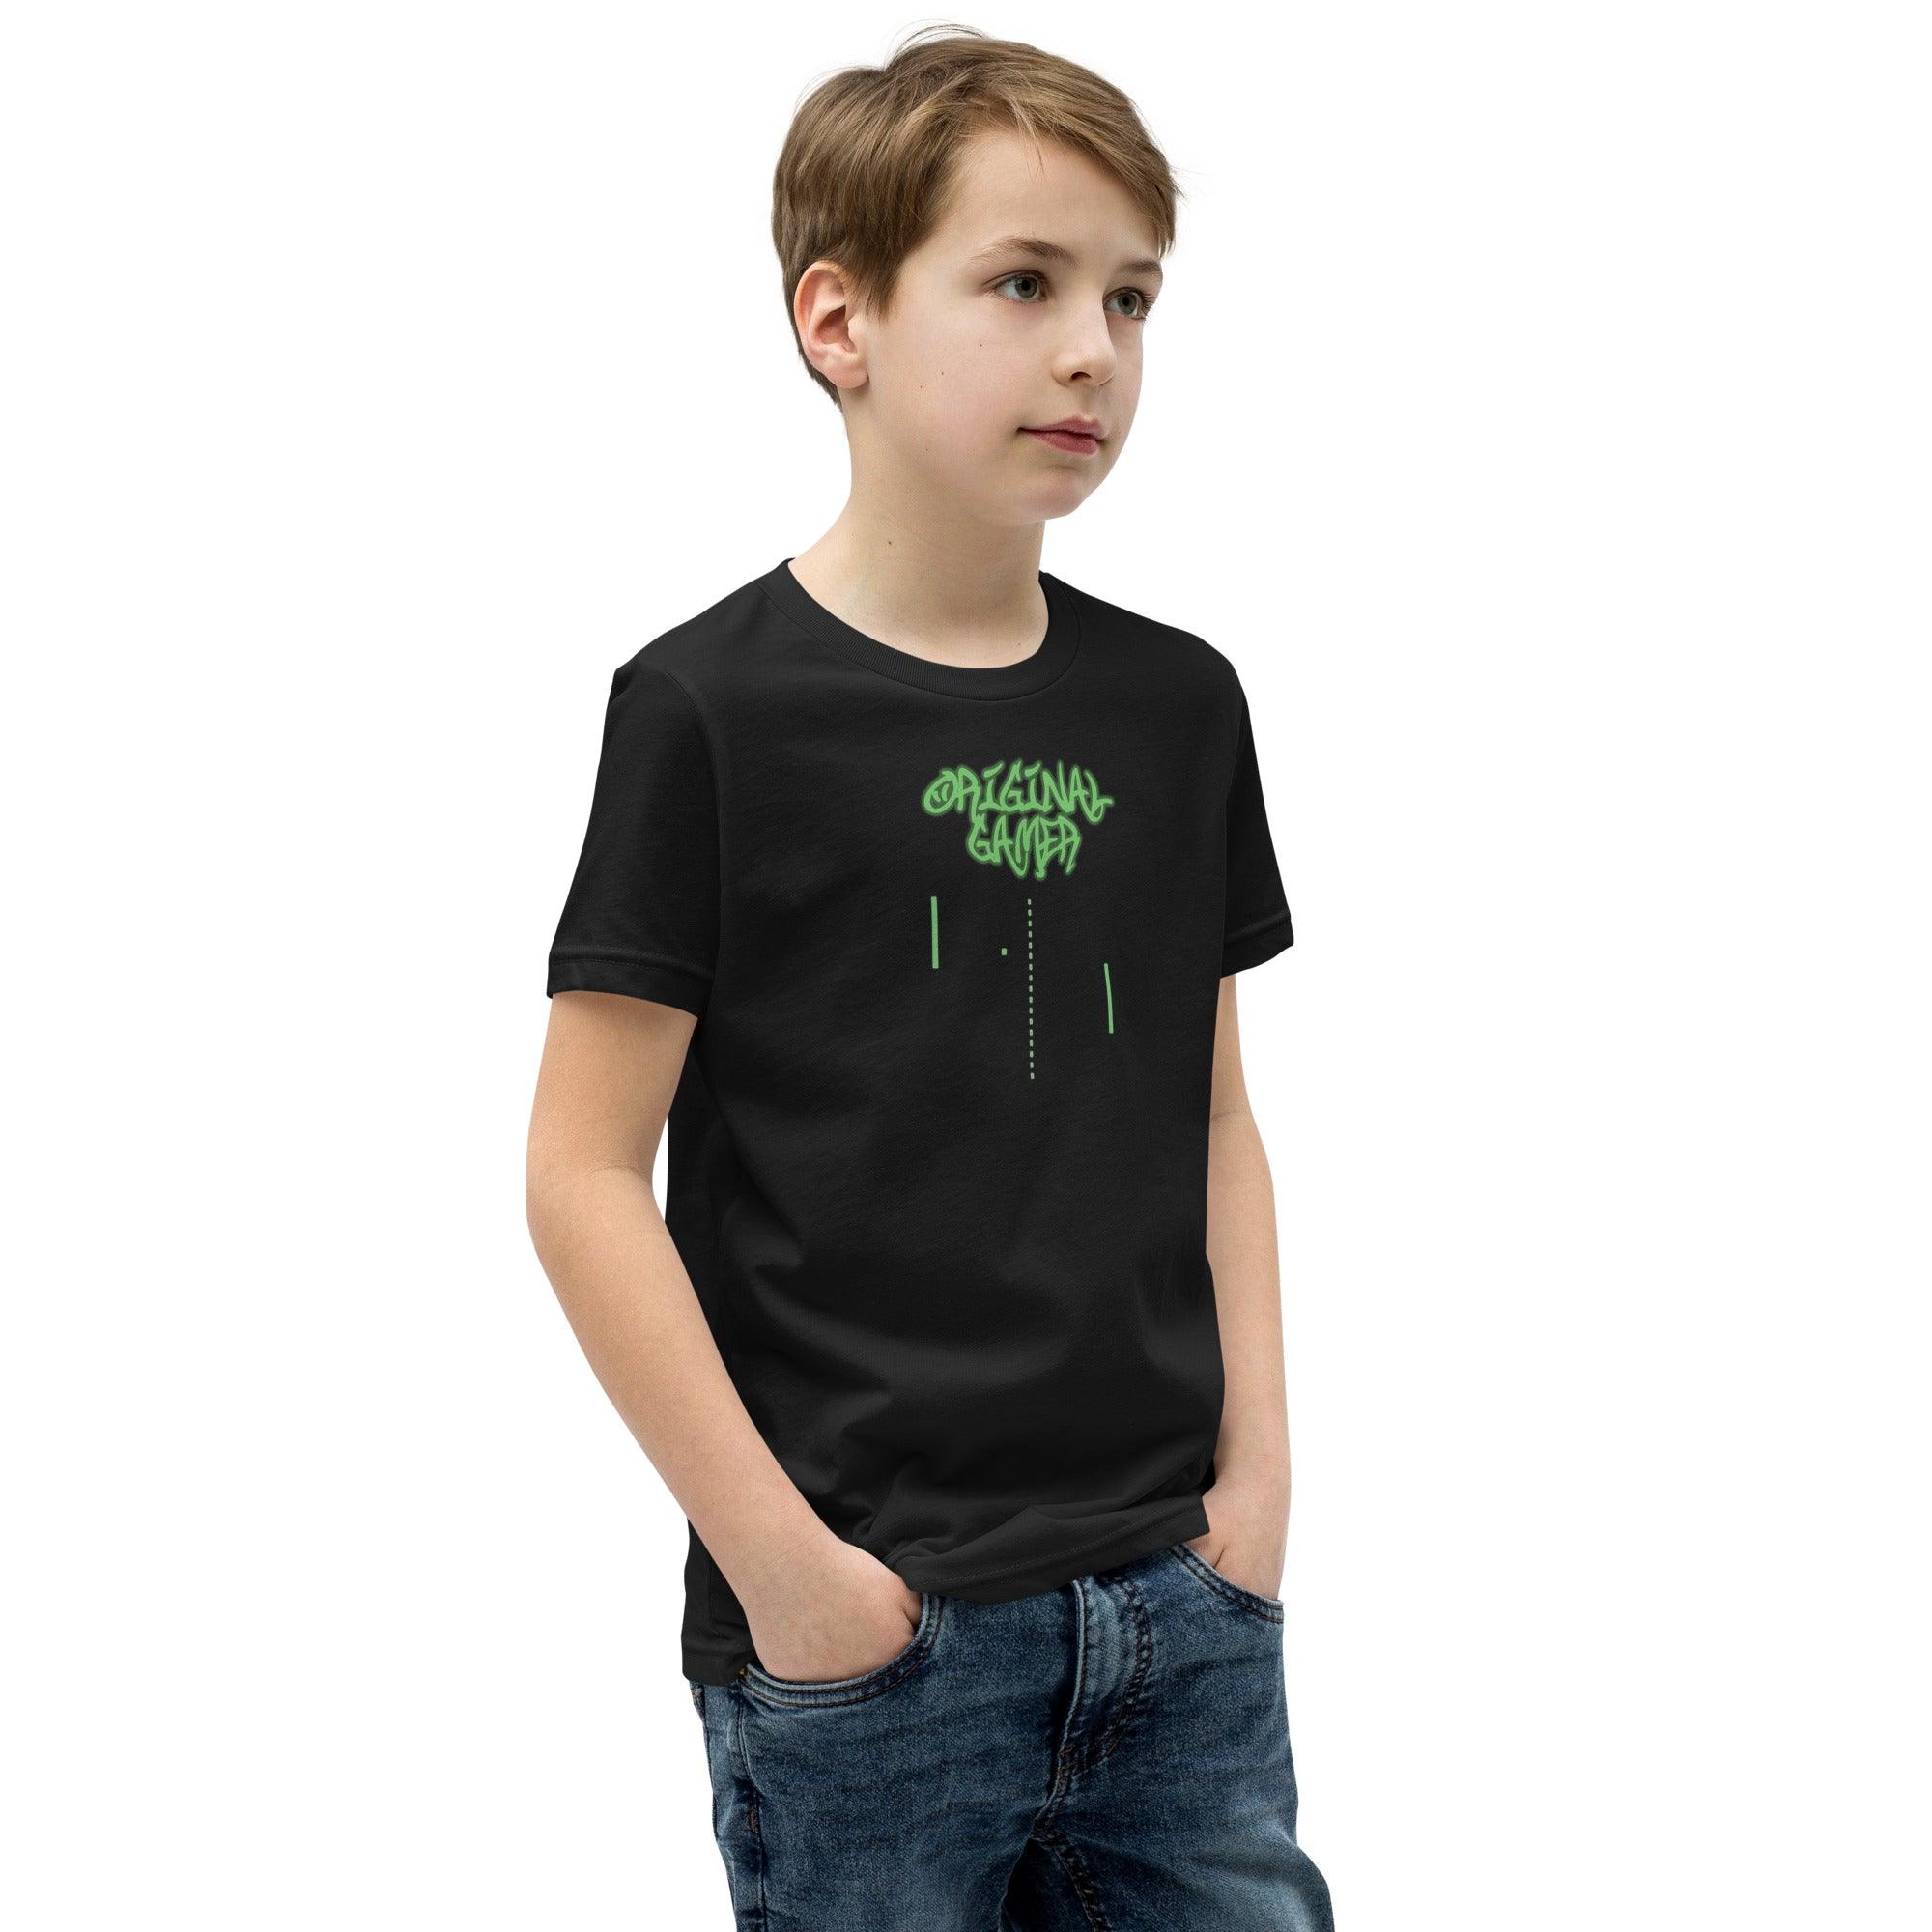 OG (Original Gamer) Youth Short Sleeve T-Shirt